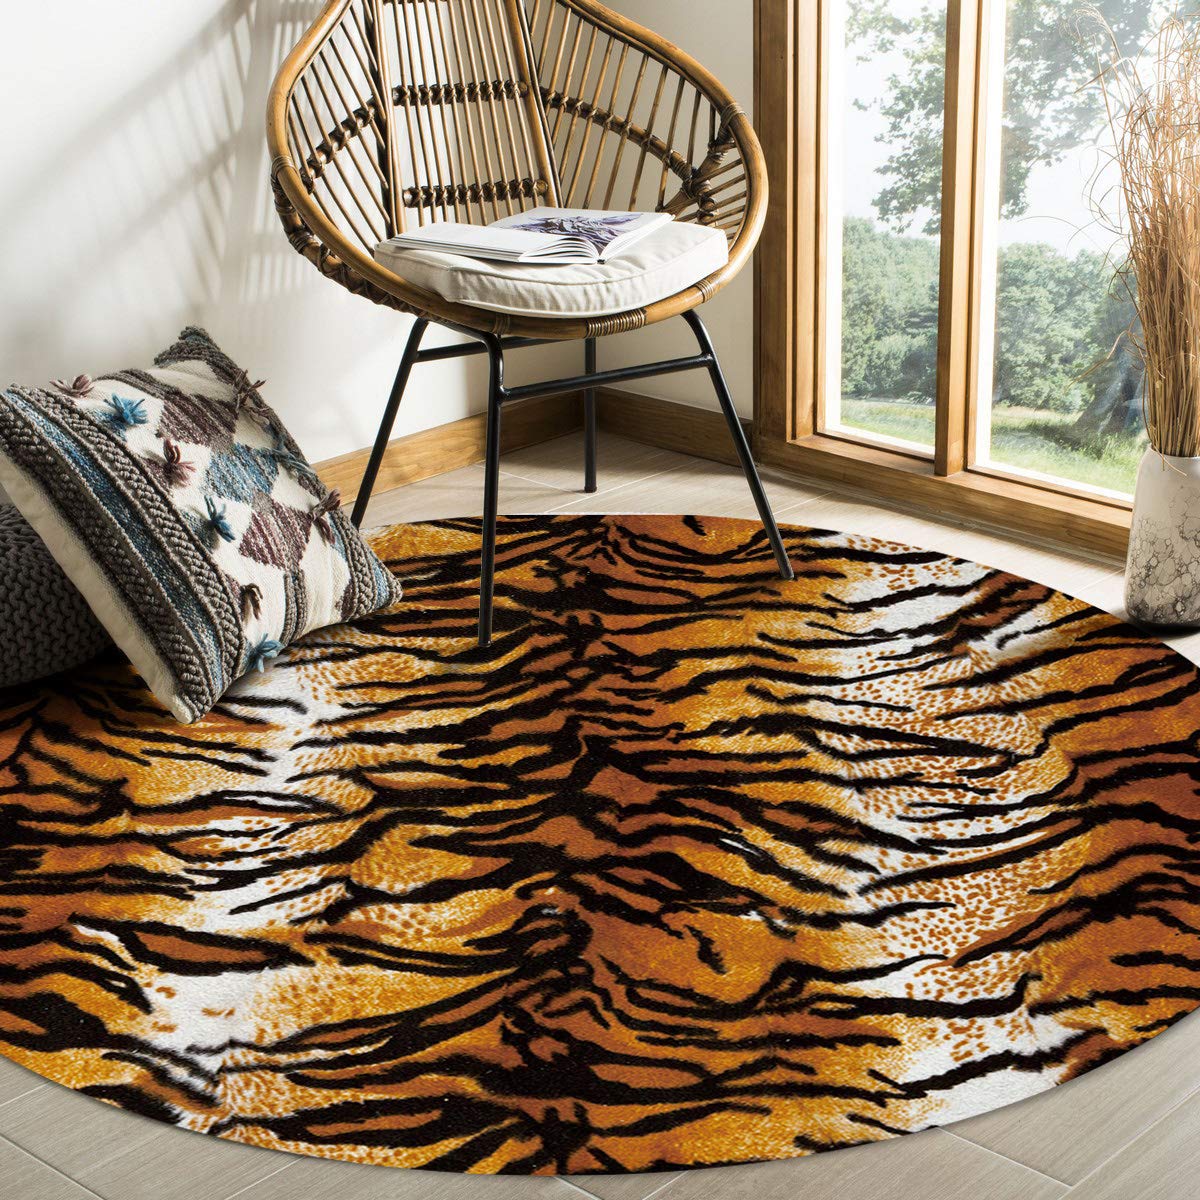 Round Area Rugs Tiger Stripe Pattern Soft Carpets Indoors/Living Dining/Bedroom/Children Playroom Crawl Rug Floor Mats Yoga Mat, Orange 6 ft Diameter